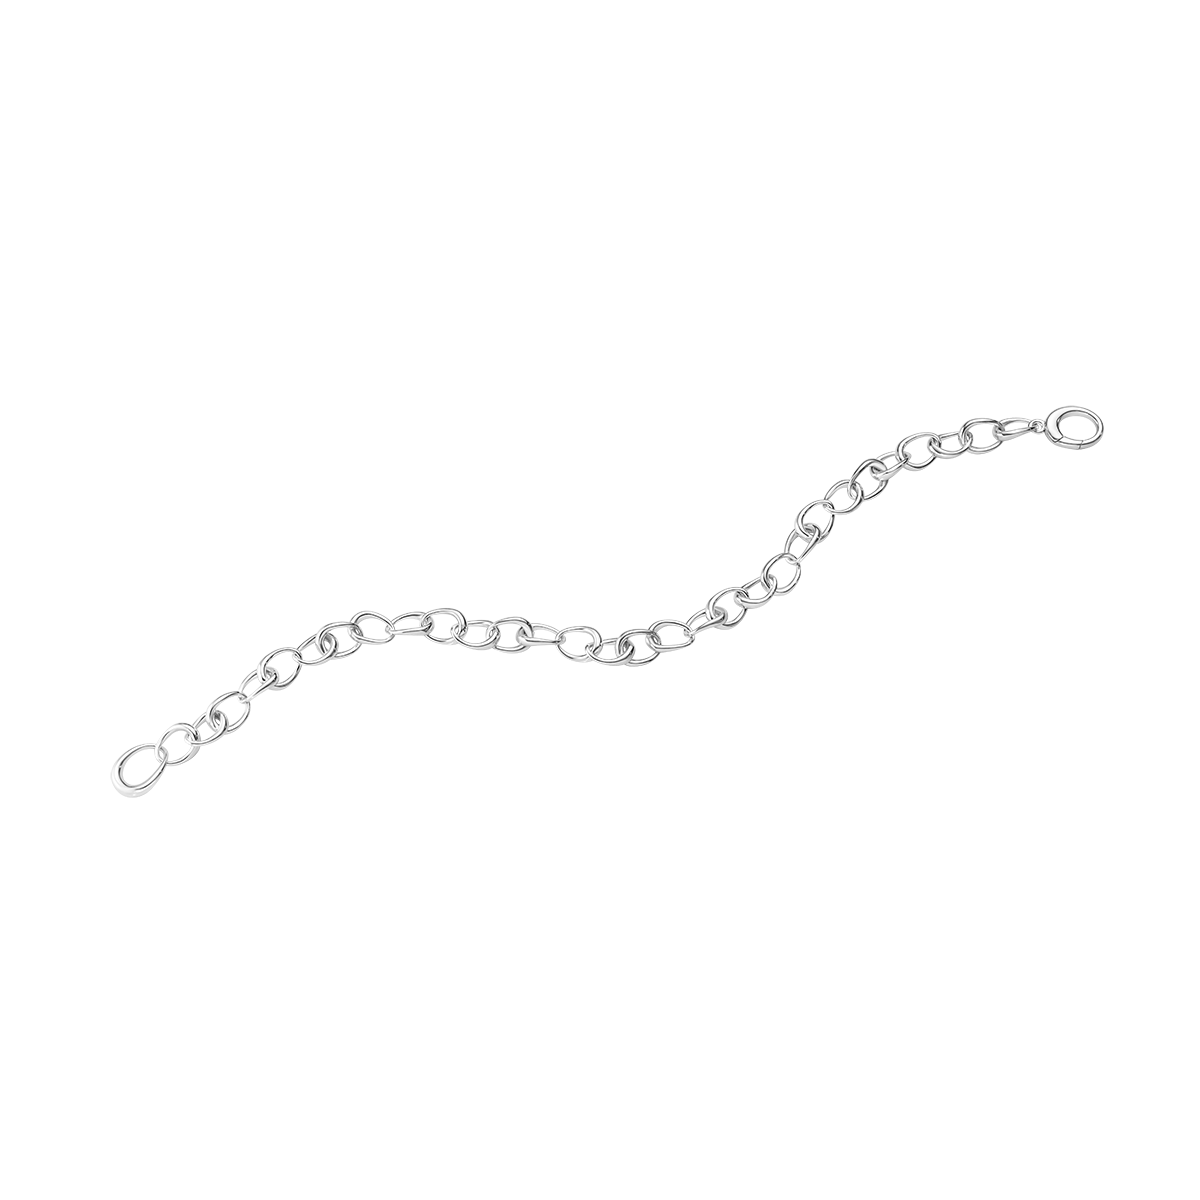 Offspring armbånd - sølv fra Georg Jensen